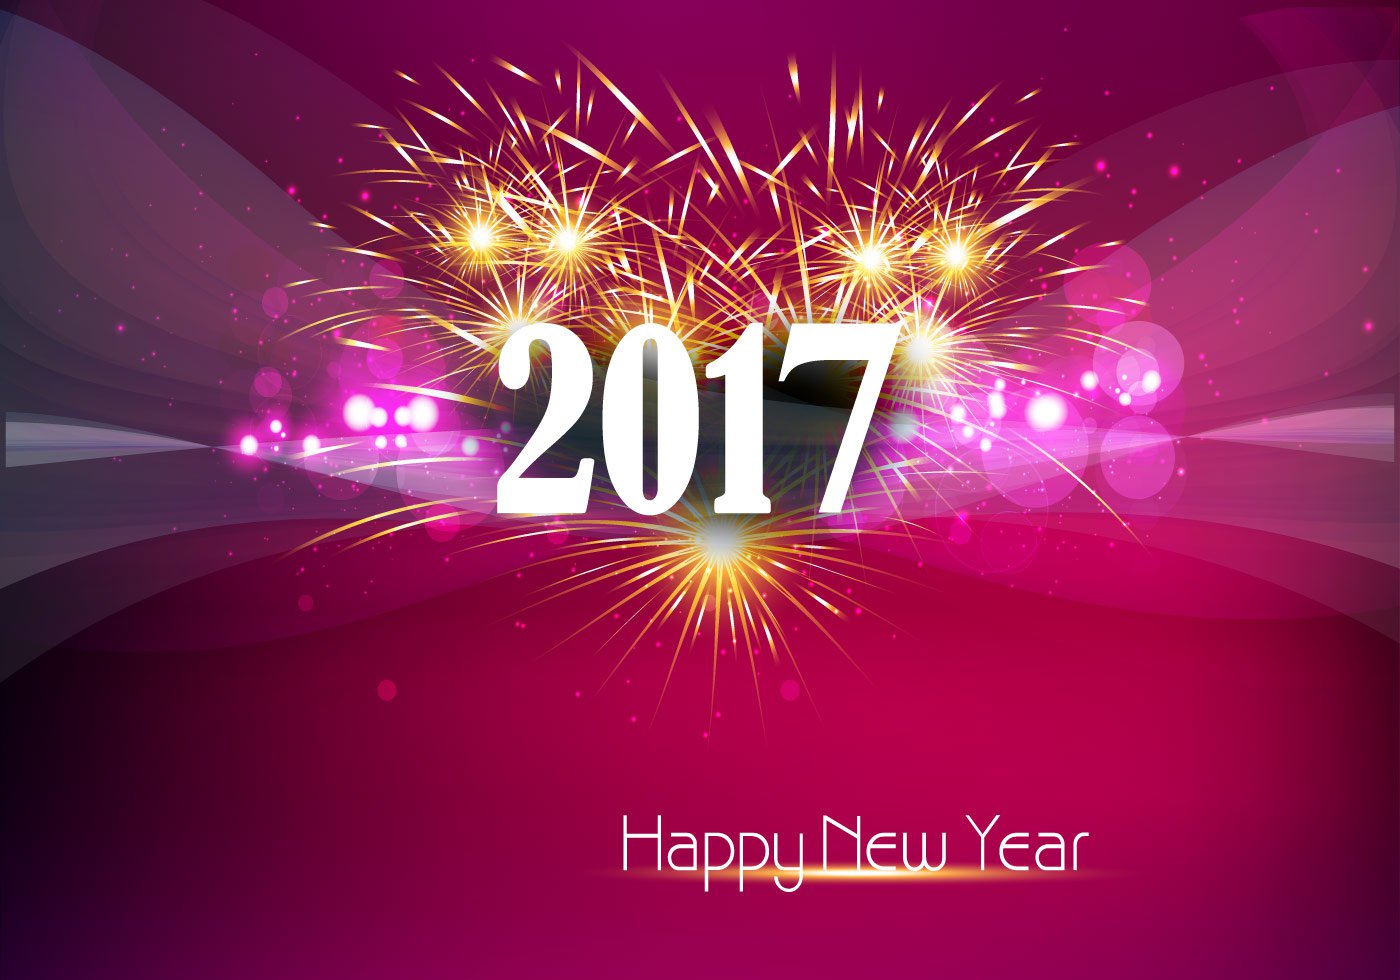 2017-happy-new-year-17.jpg (1400×980)